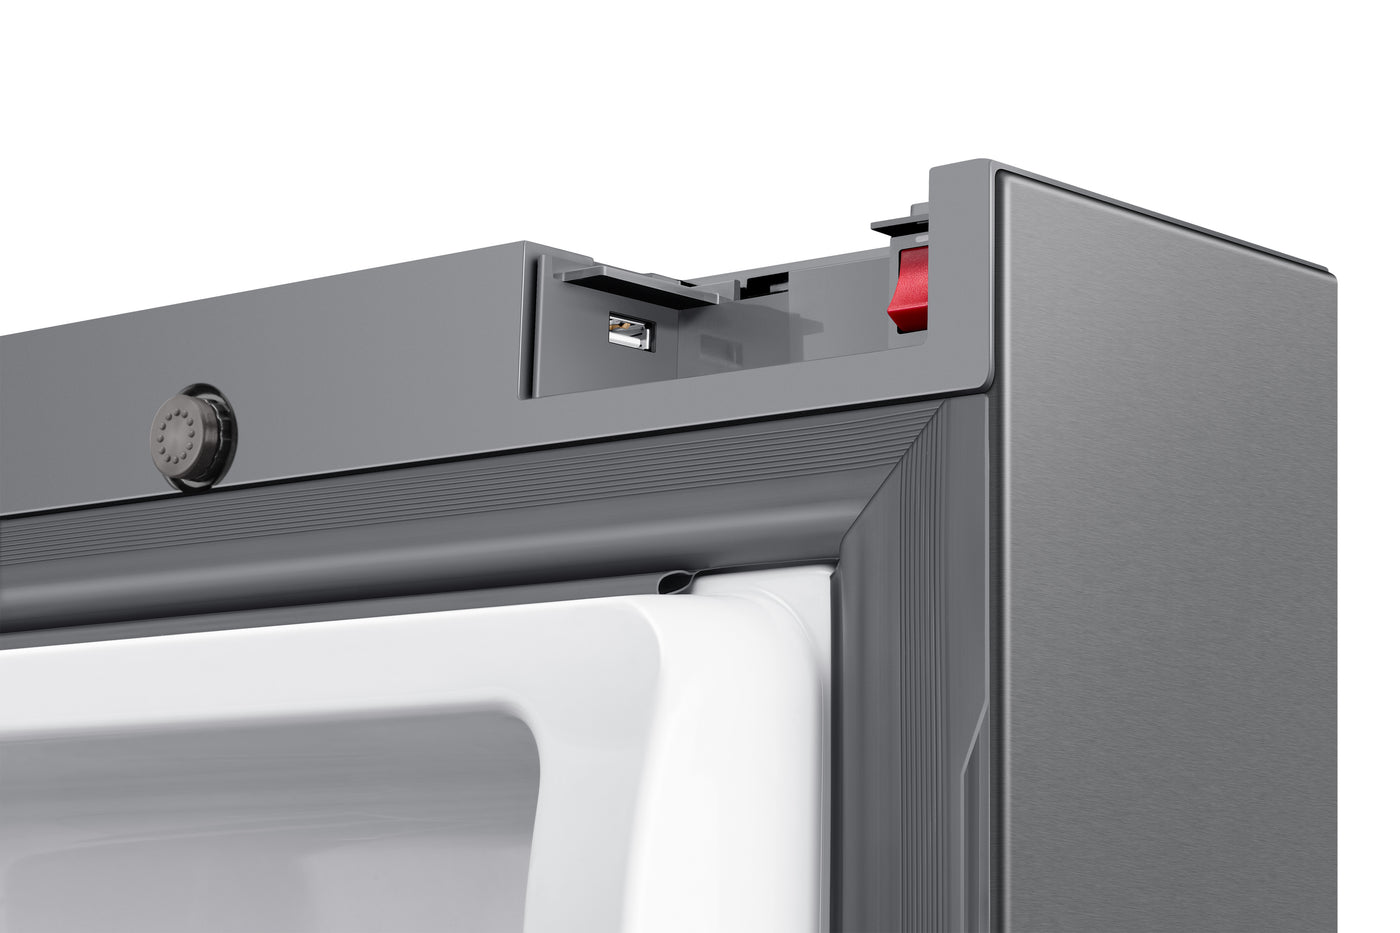 Samsung Stainless Steel 36" Counter Depth 4-Door Flex Refrigerator with Family Hub 6.0 (22.9 Cu.Ft) - RF23A9771SR/AC